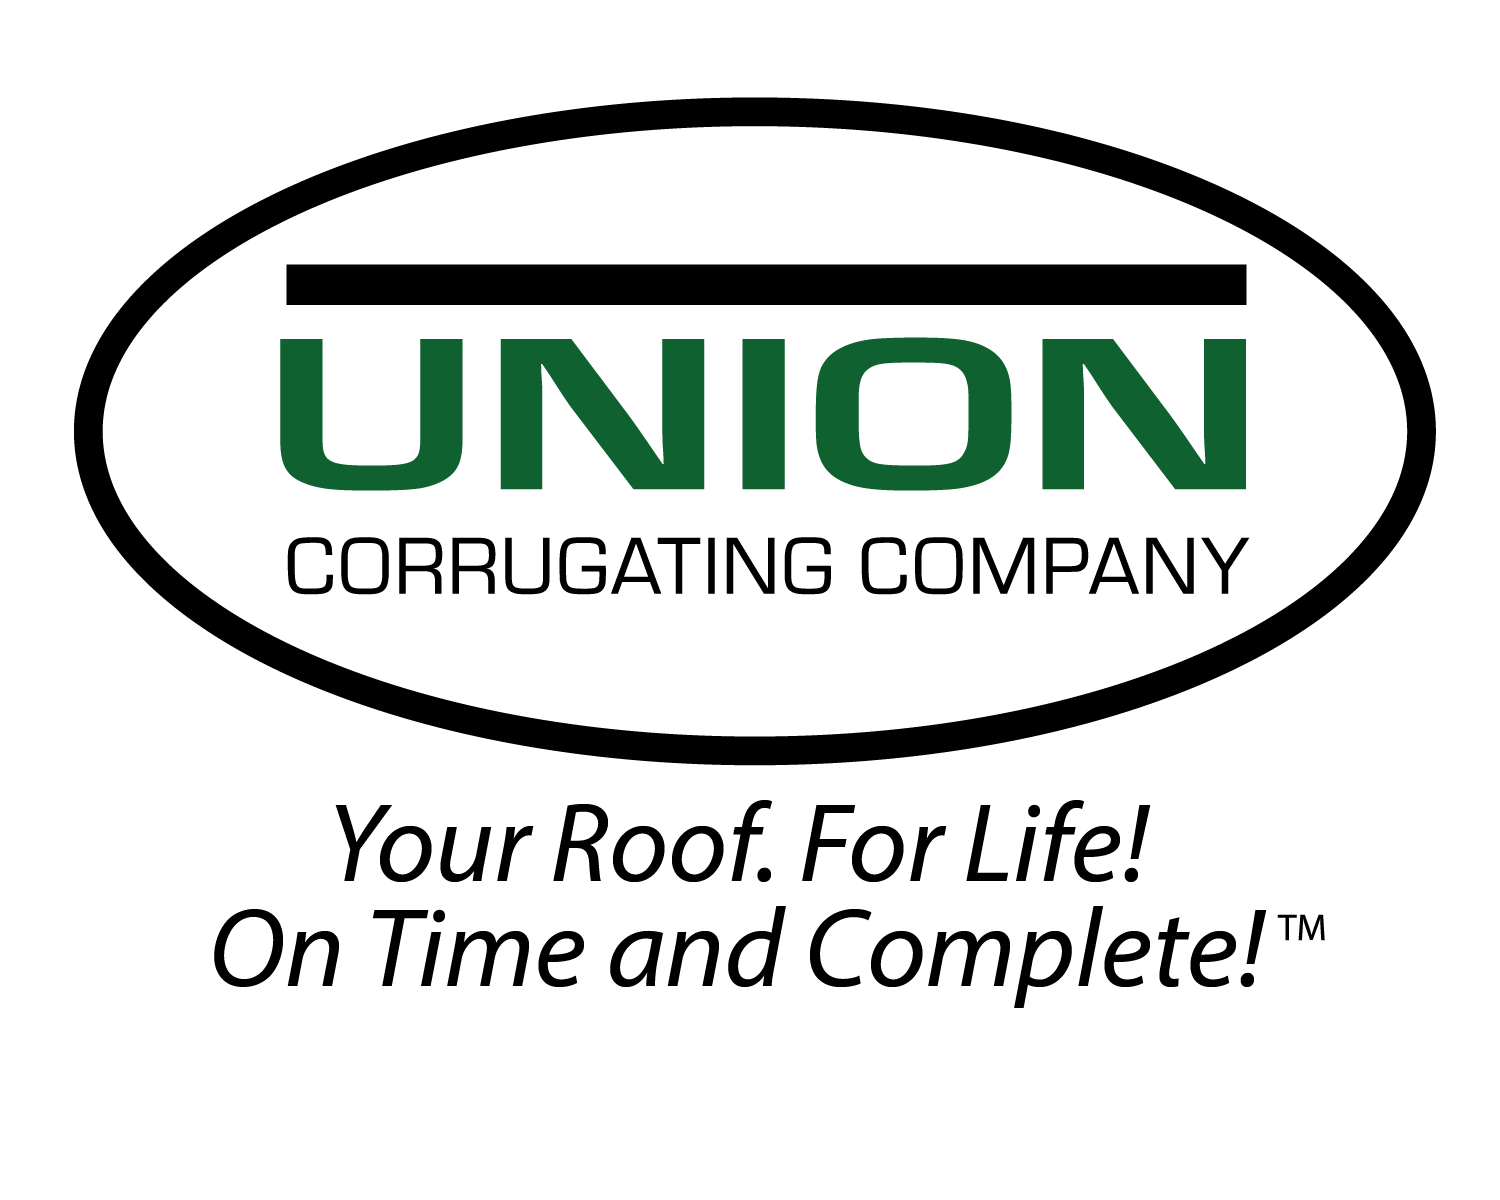 Union Corrugating undefined at